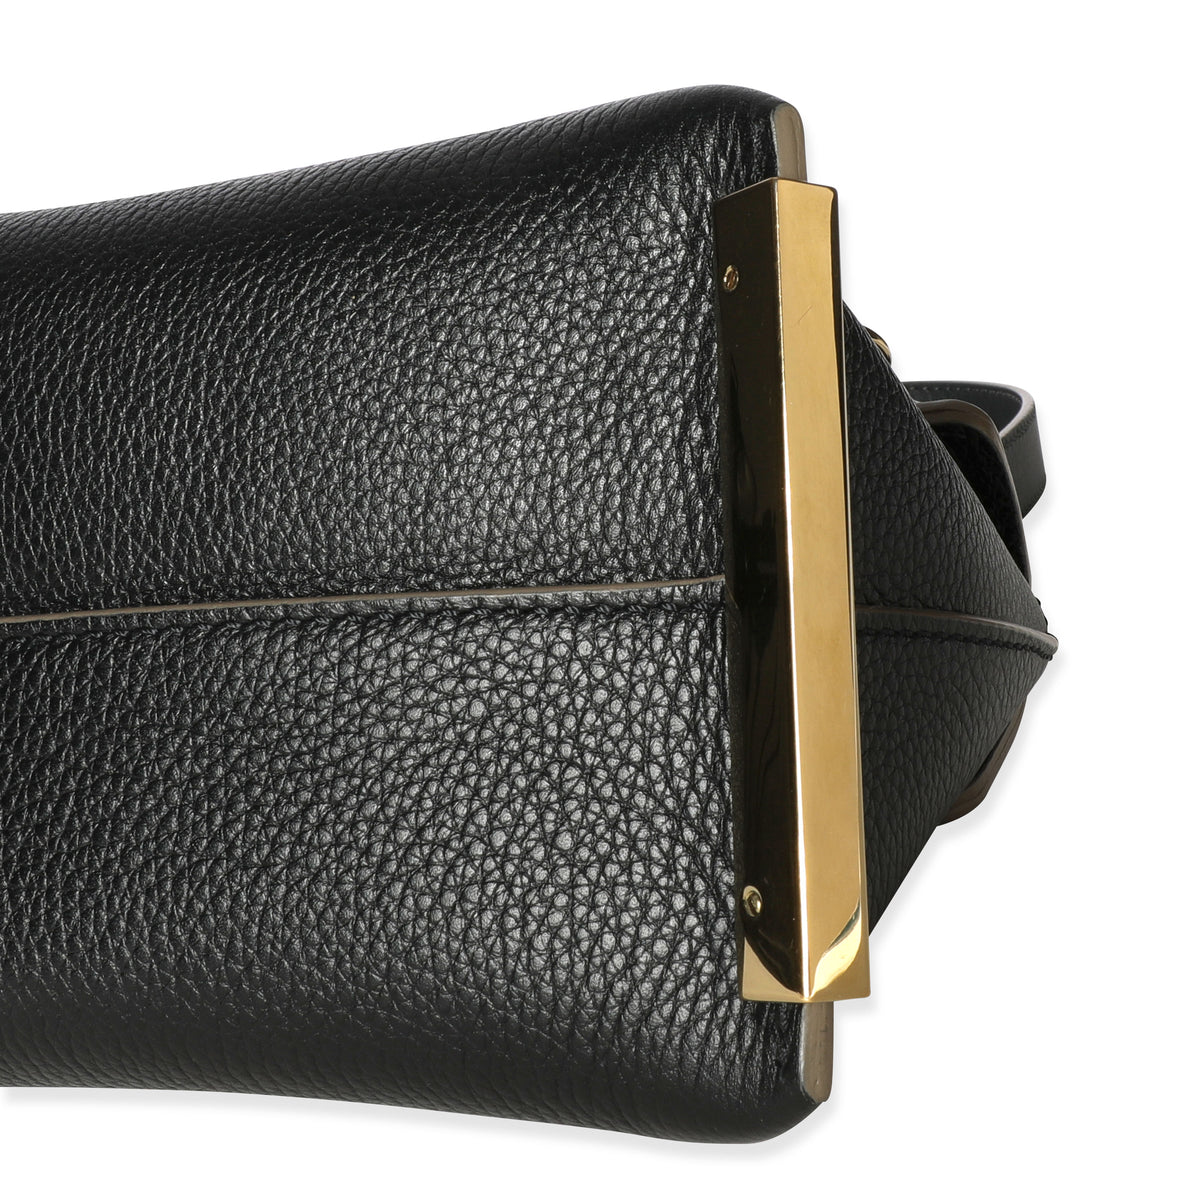 Chloé Black & Sand Leather Mini Clare Bag